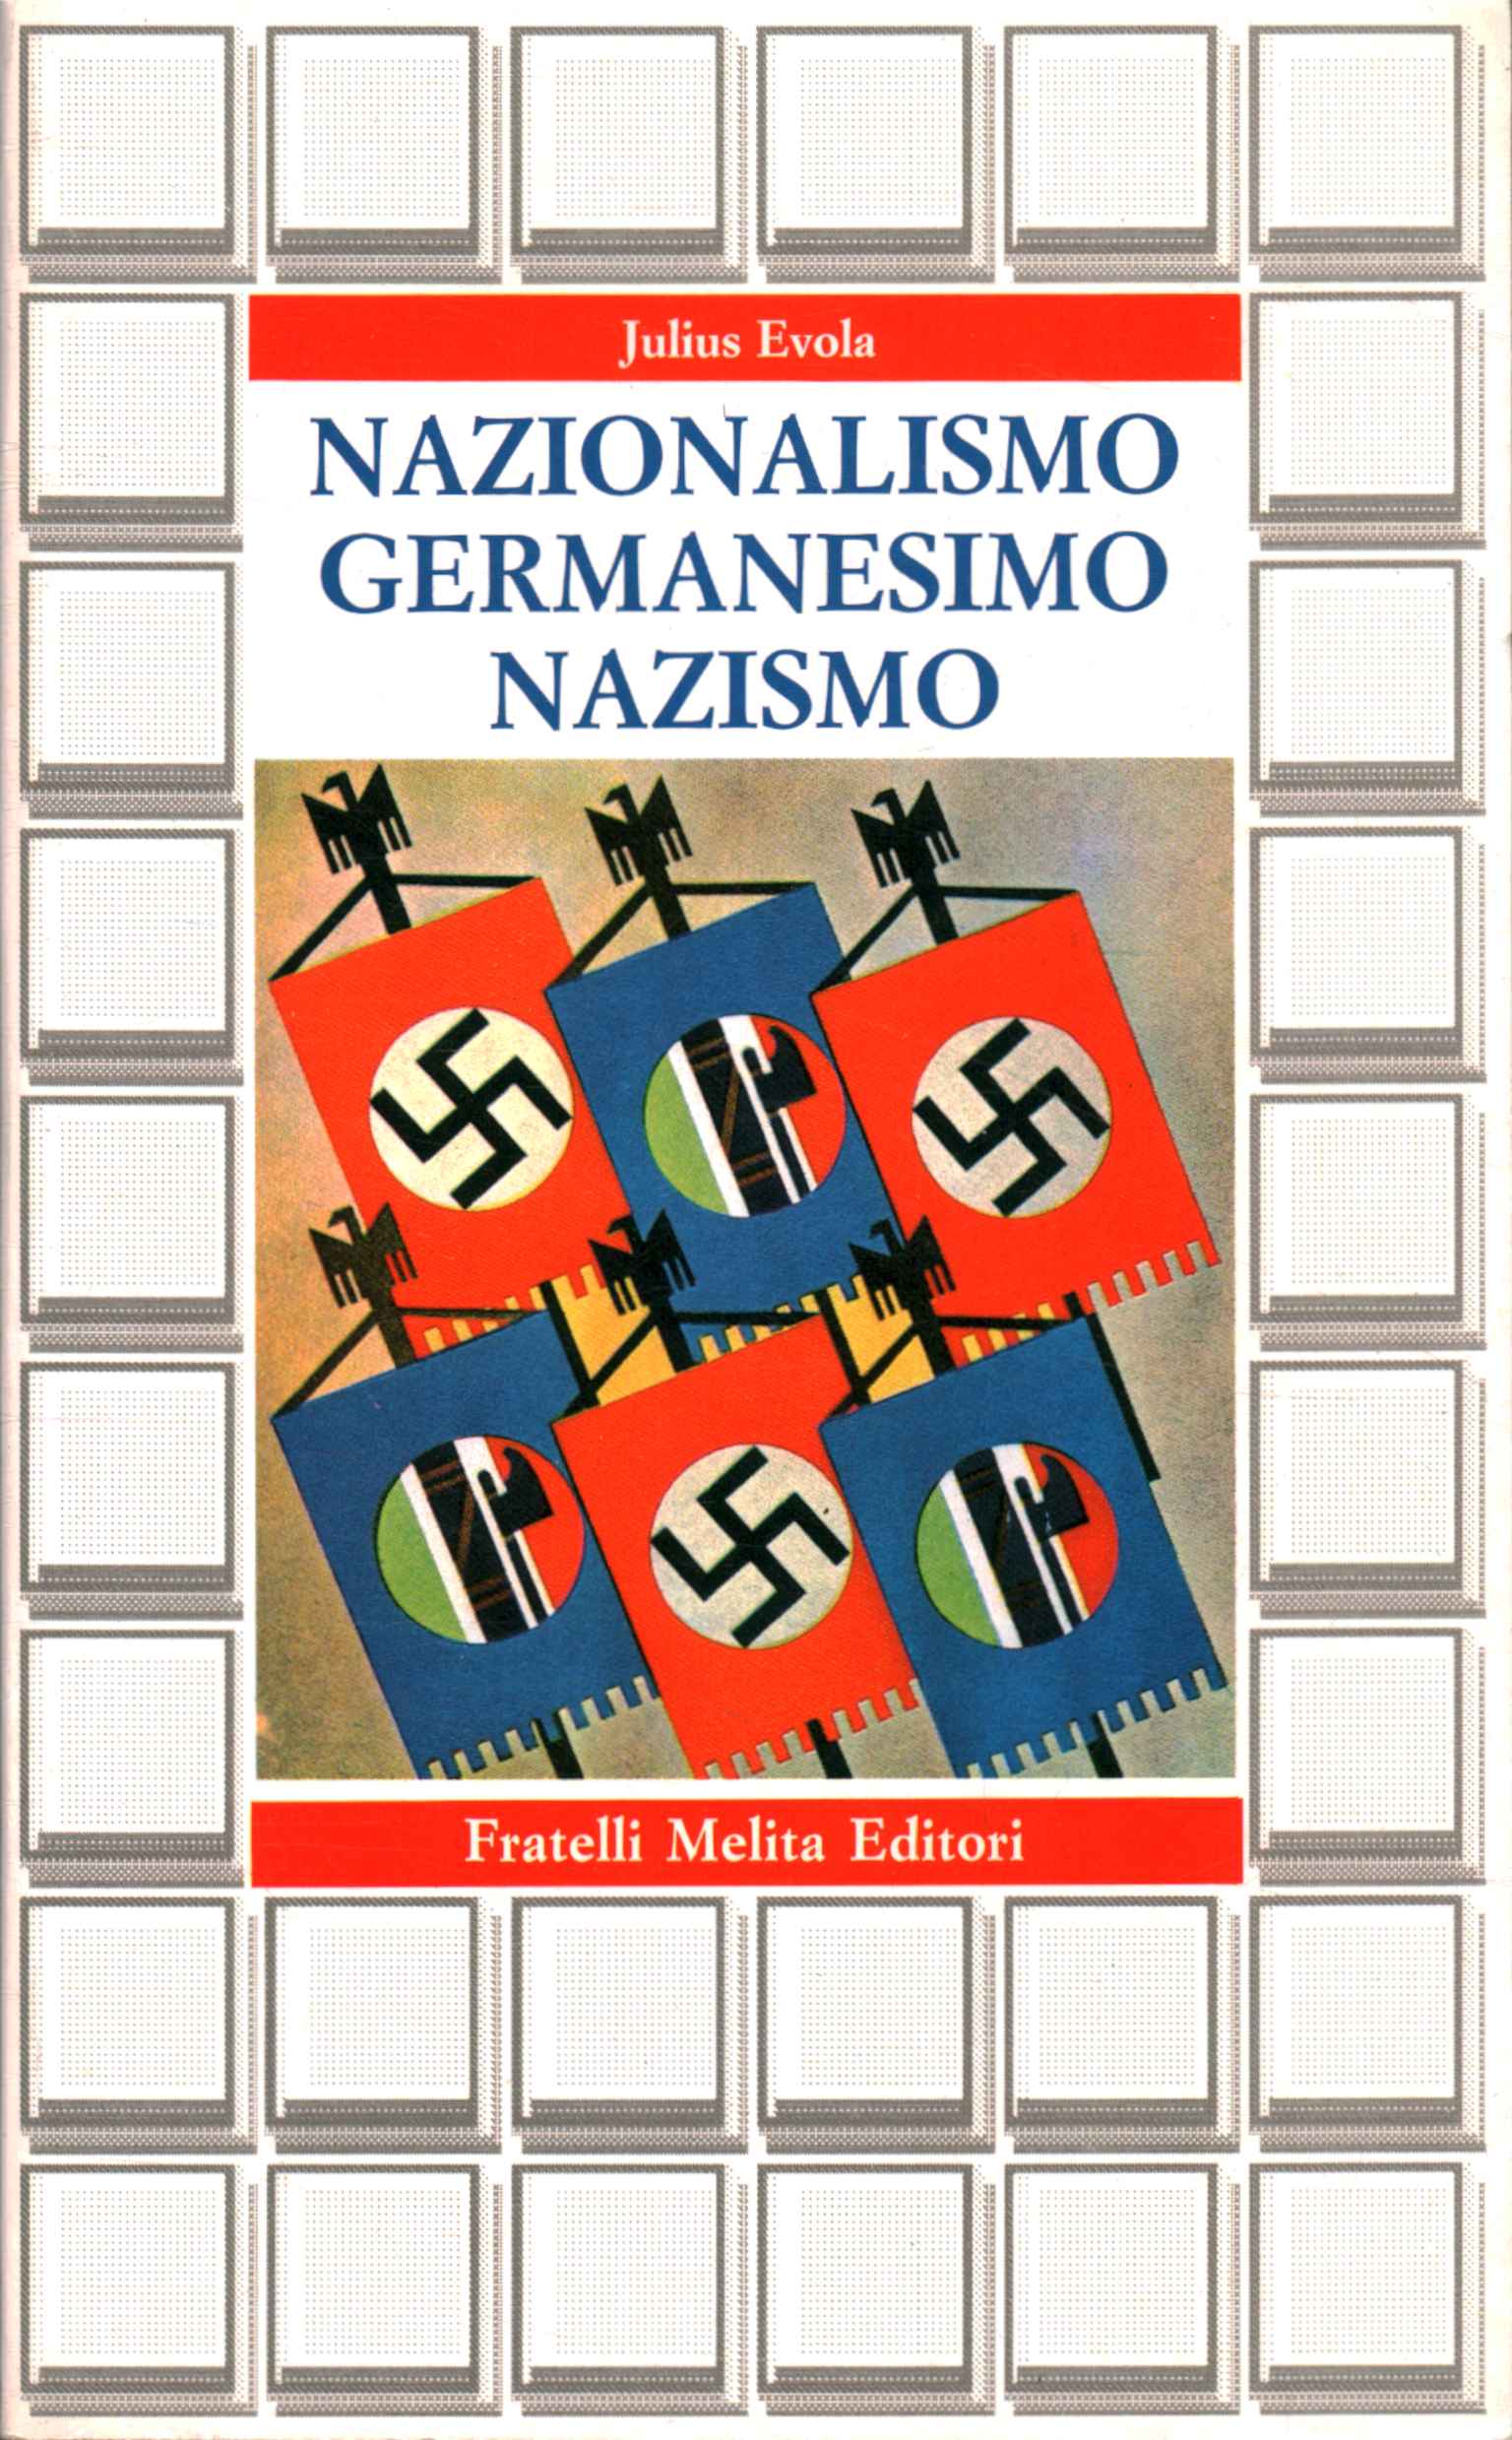 Nationalism Germanism Nazism